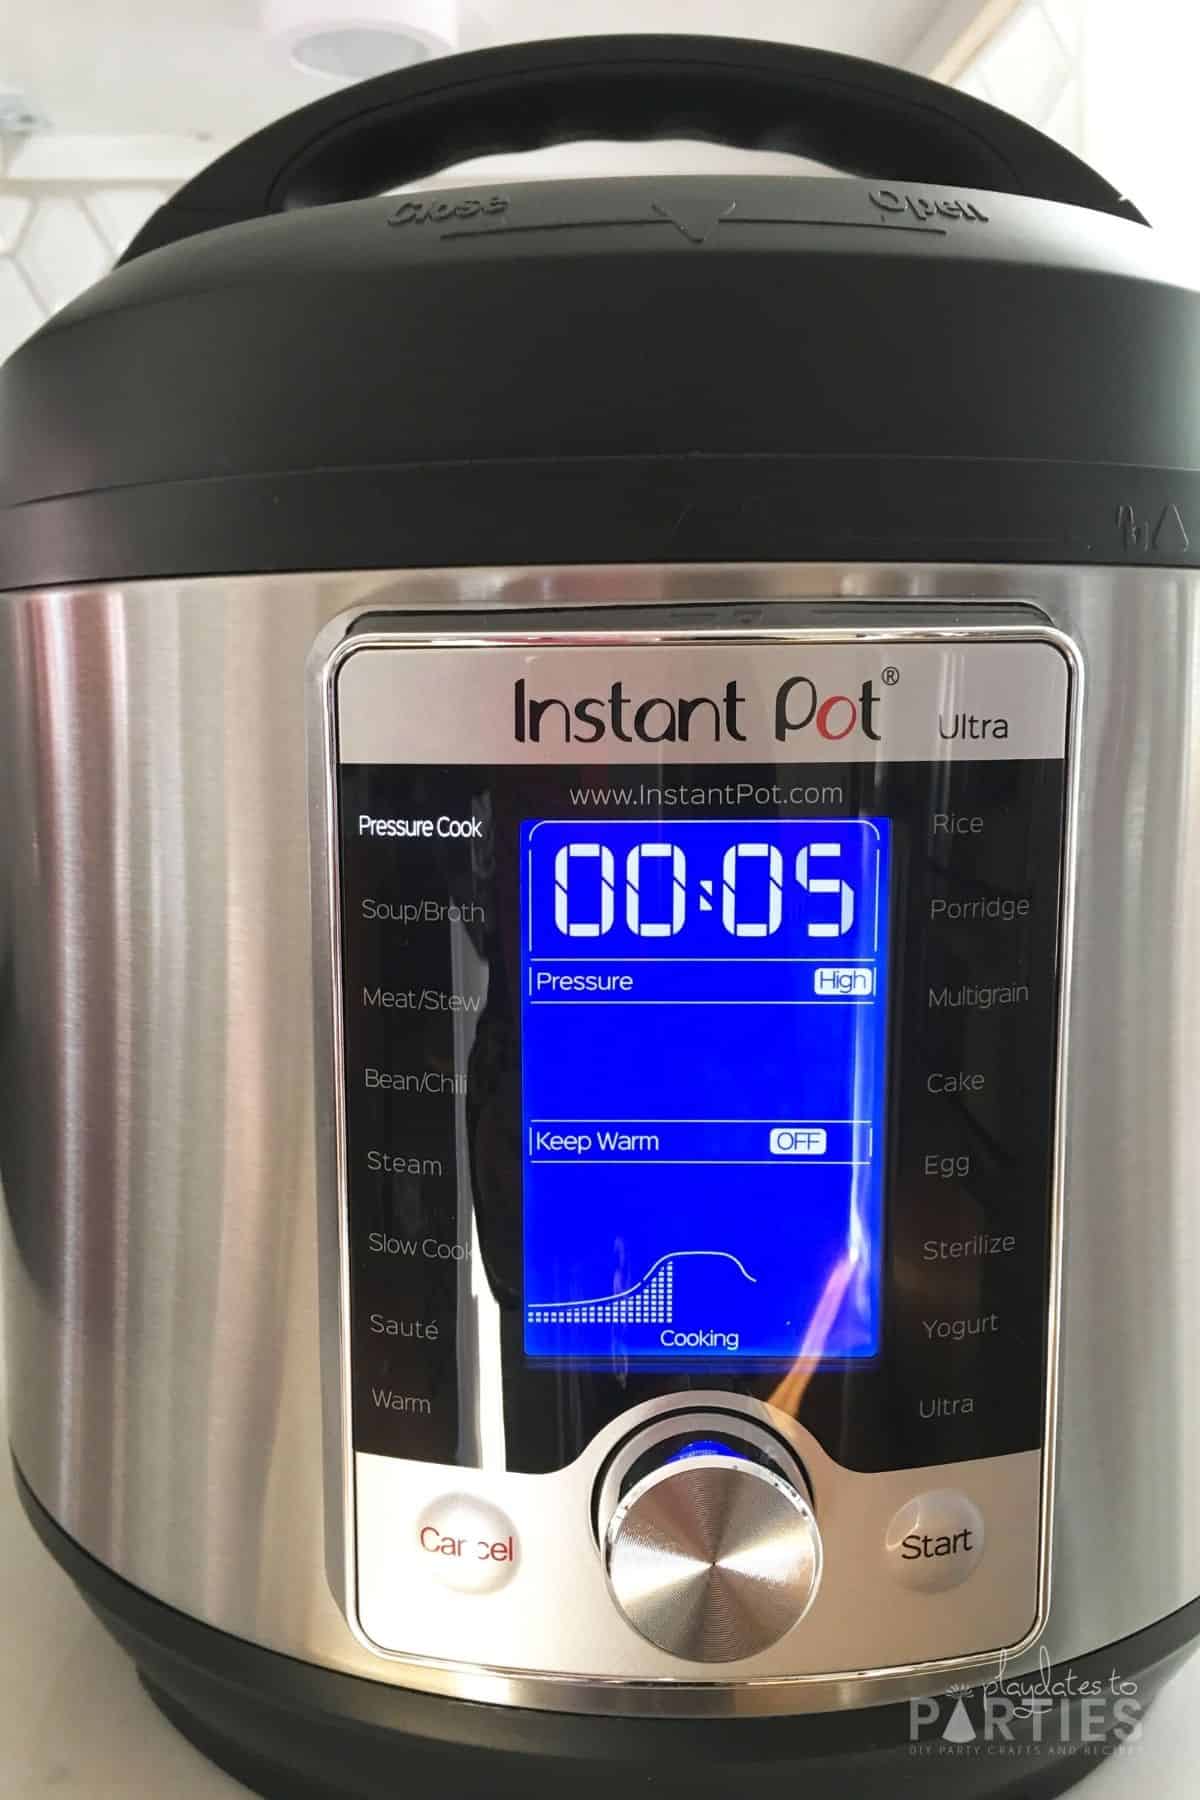 Instant Pot display set to 5 minutes high pressure.